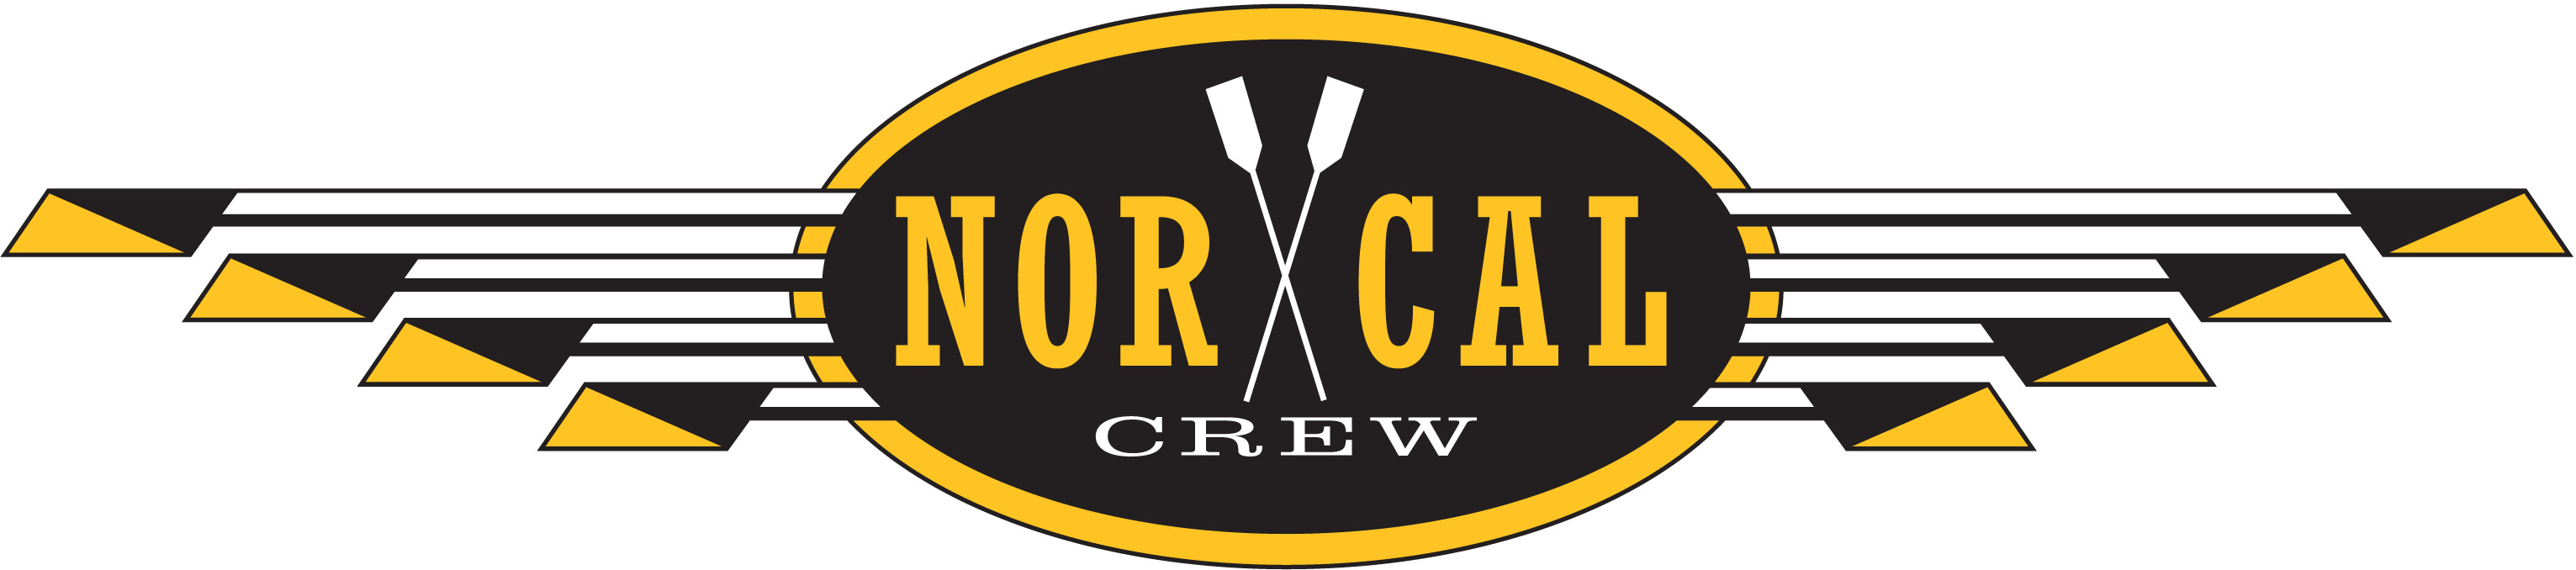 Norcal Crew Learn-to-Row